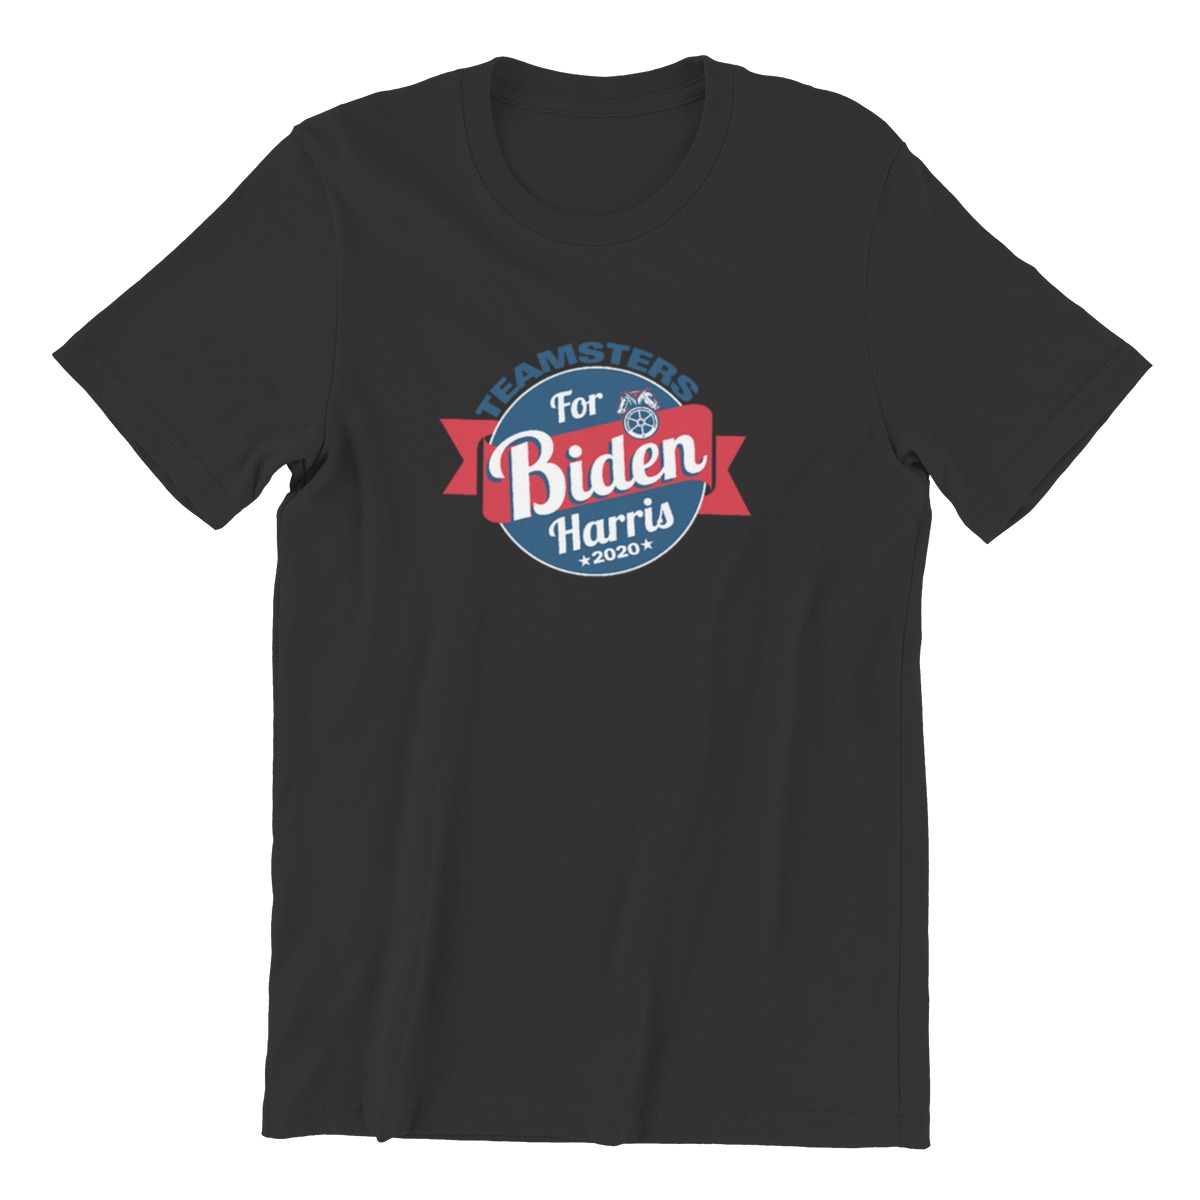 atinfor 10 Biden Harris Men's T Shirt Novelty Tops Bitumen Bike Life Tees Clothes Cotton Printed T-Shirt Plus Size